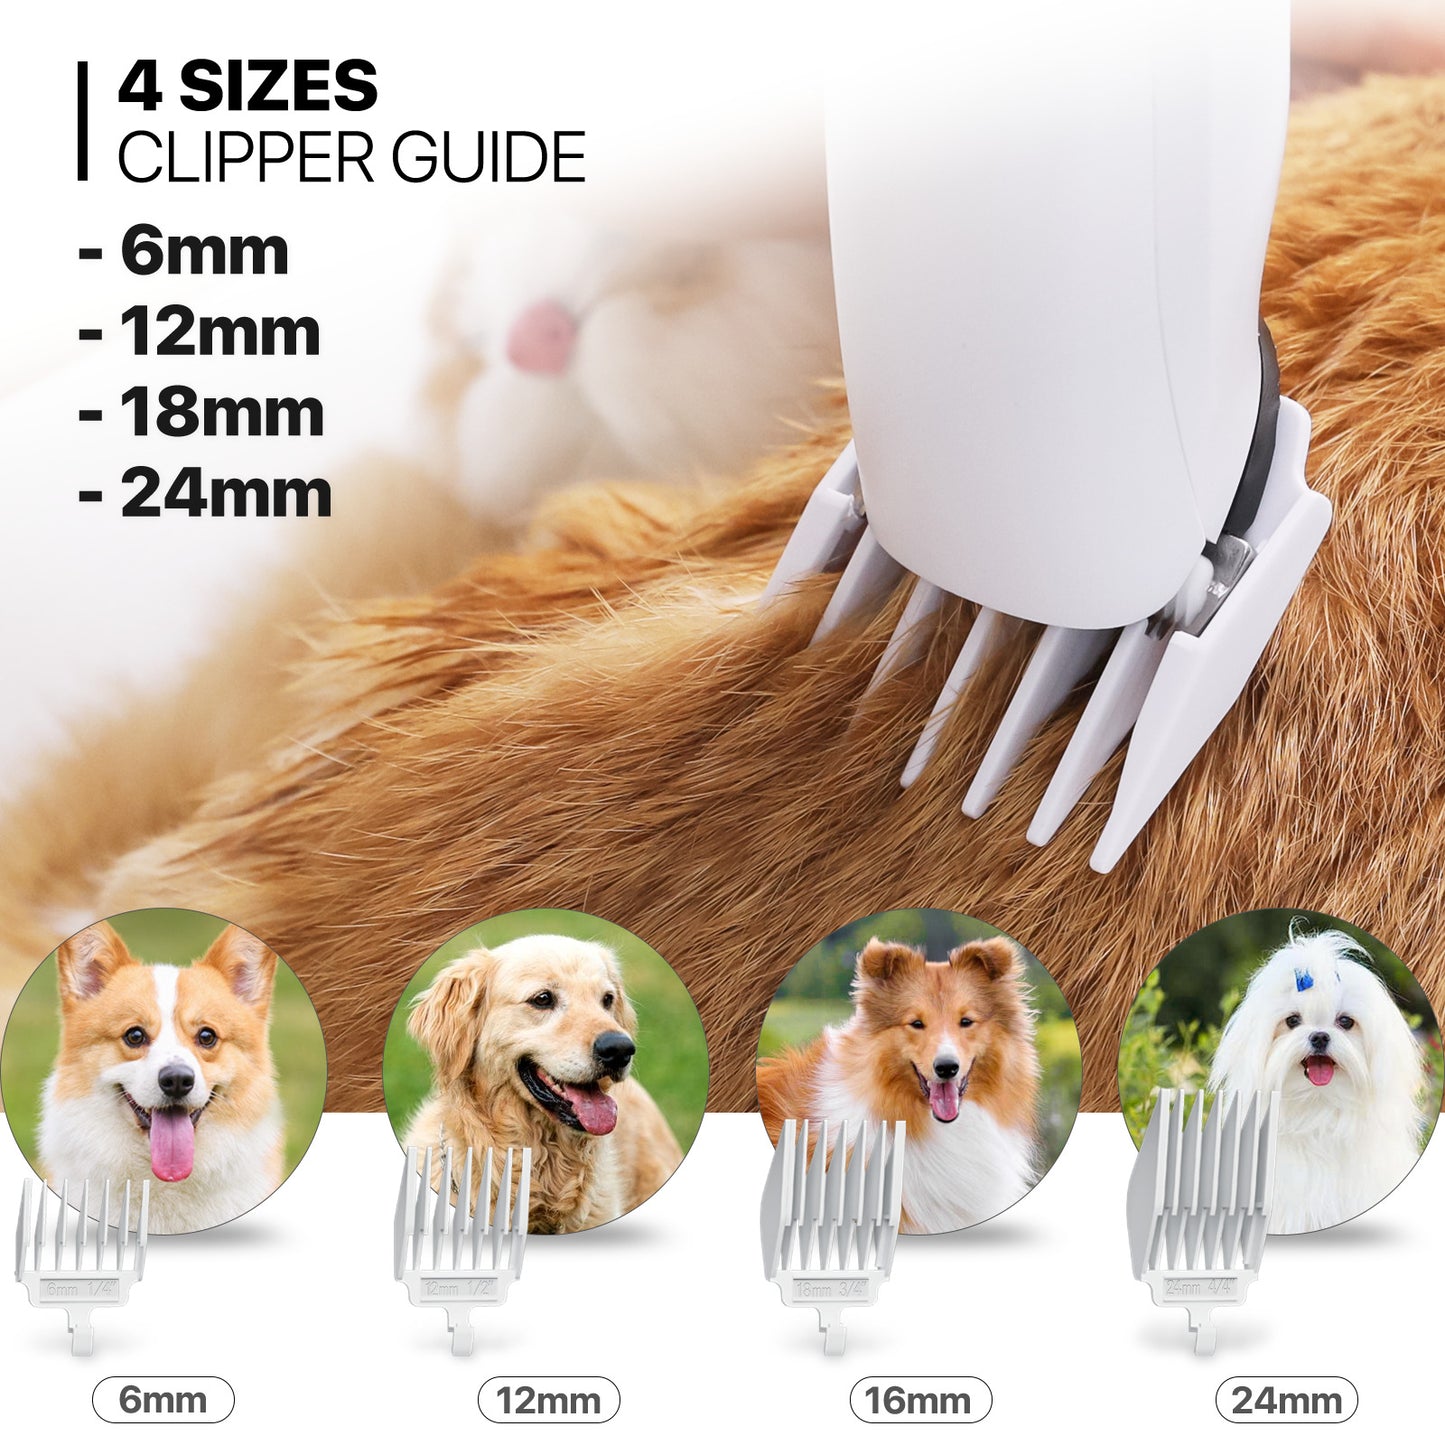 Pet Grooming Vacuum Kit - Blow & Vacuum - 300W, 3 Gear Speed, 6 Nozzles, 4L Dust Cup